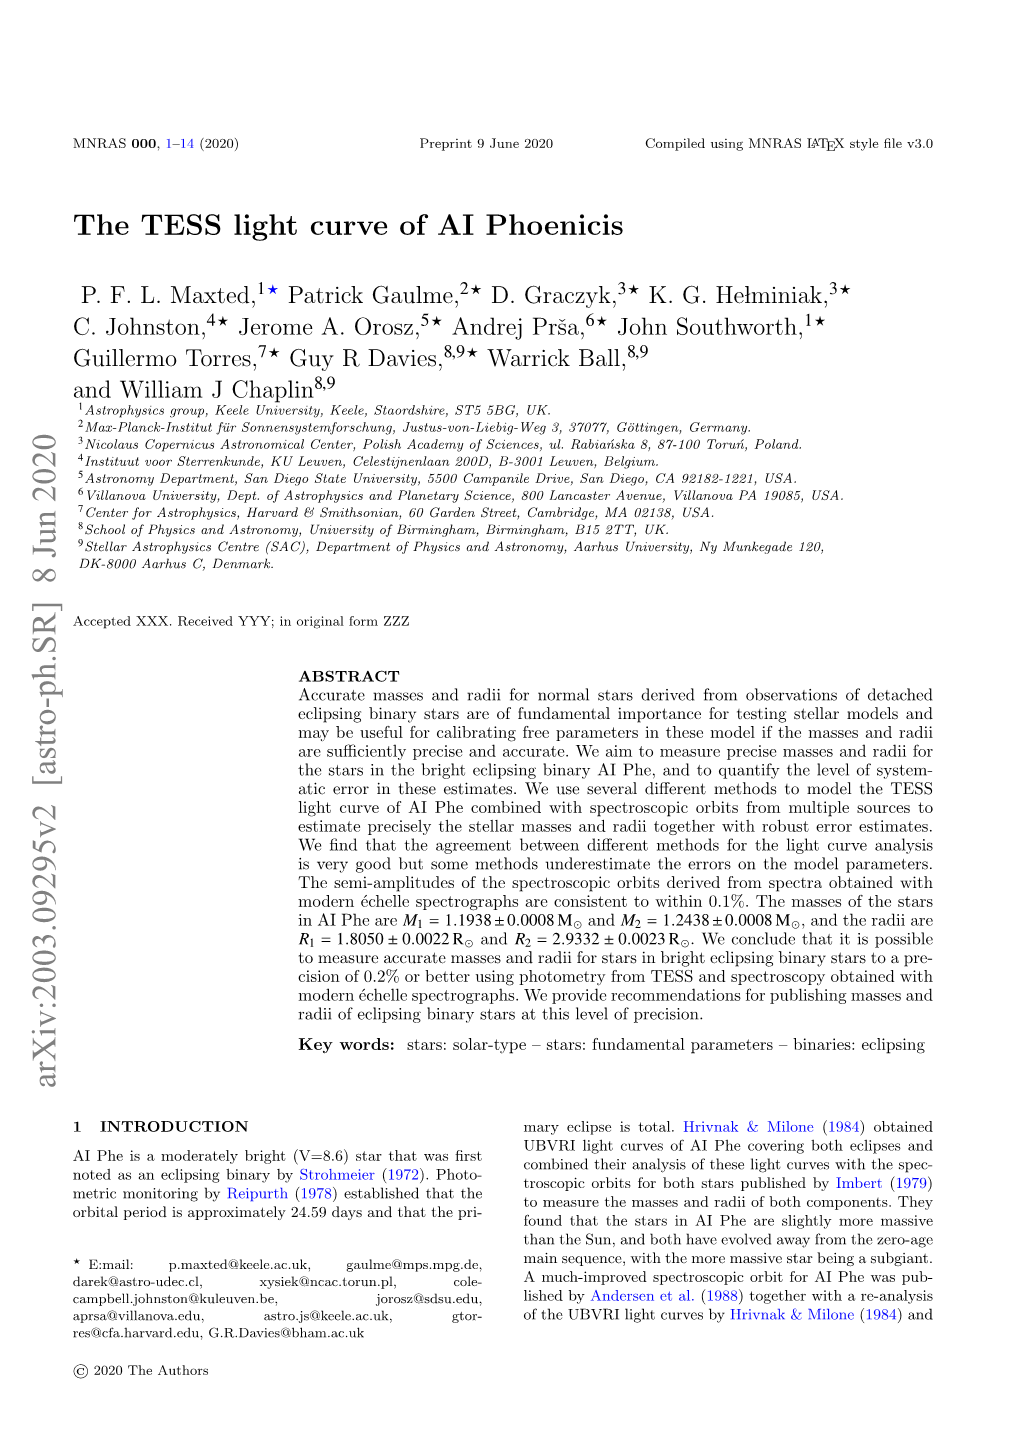 The TESS Light Curve of AI Phoenicis